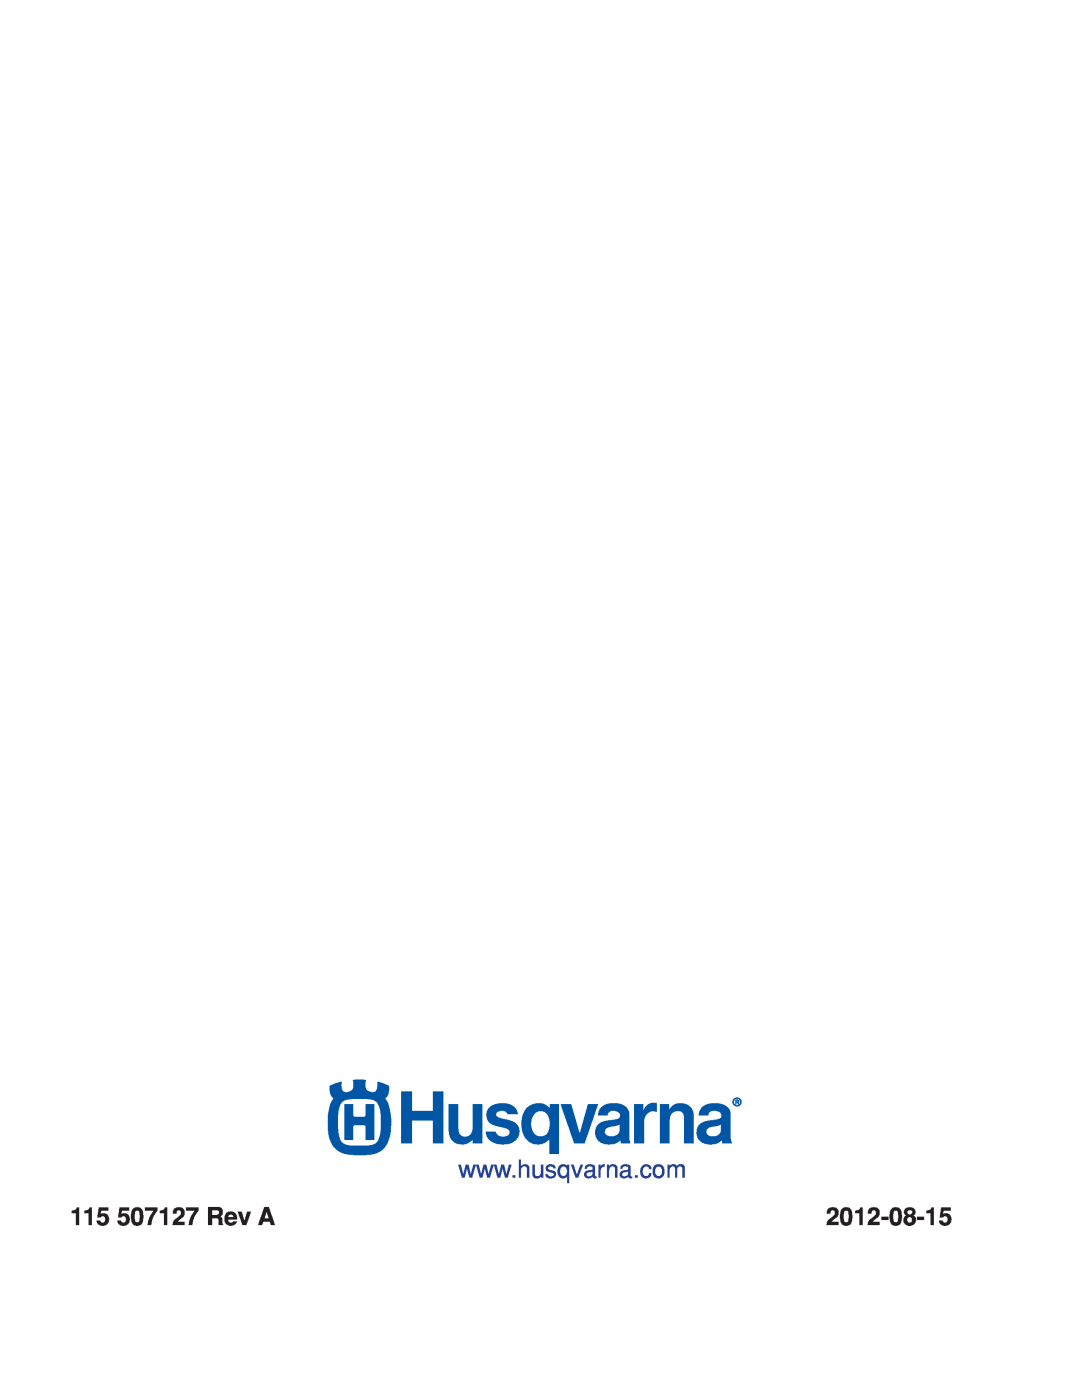 Husqvarna 966659501, EZ4824 CA warranty 115 507127 Rev A, 2012-08-15 